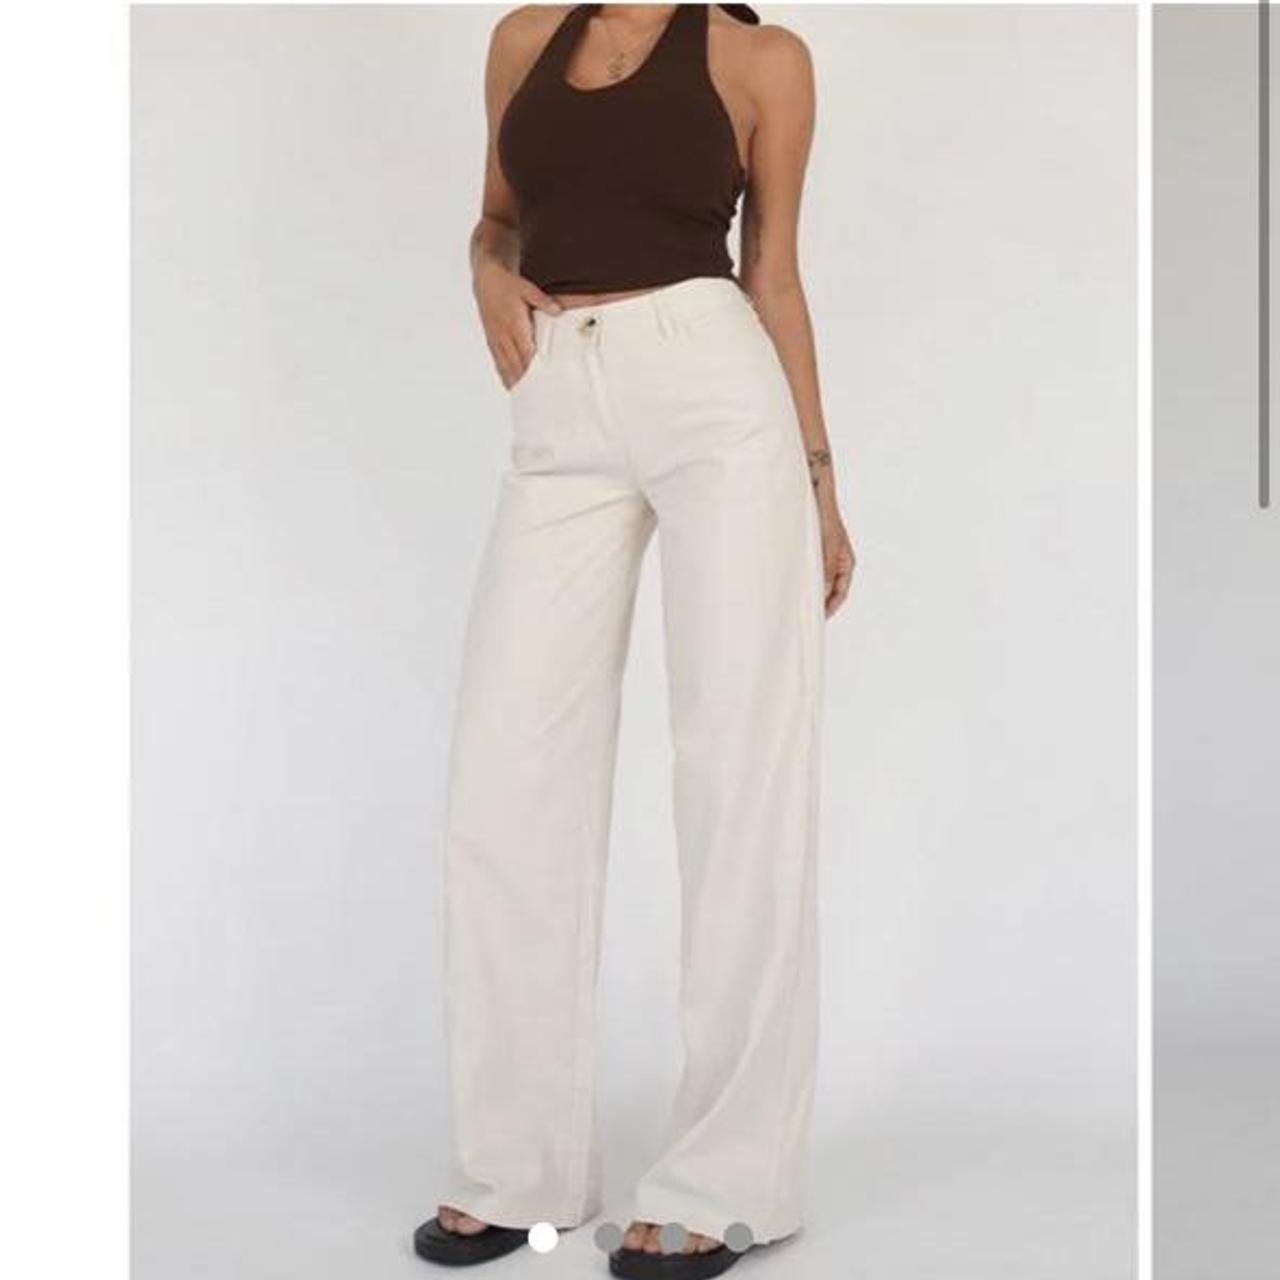 Venderbys cream linen pants - size Small - best fits - Depop